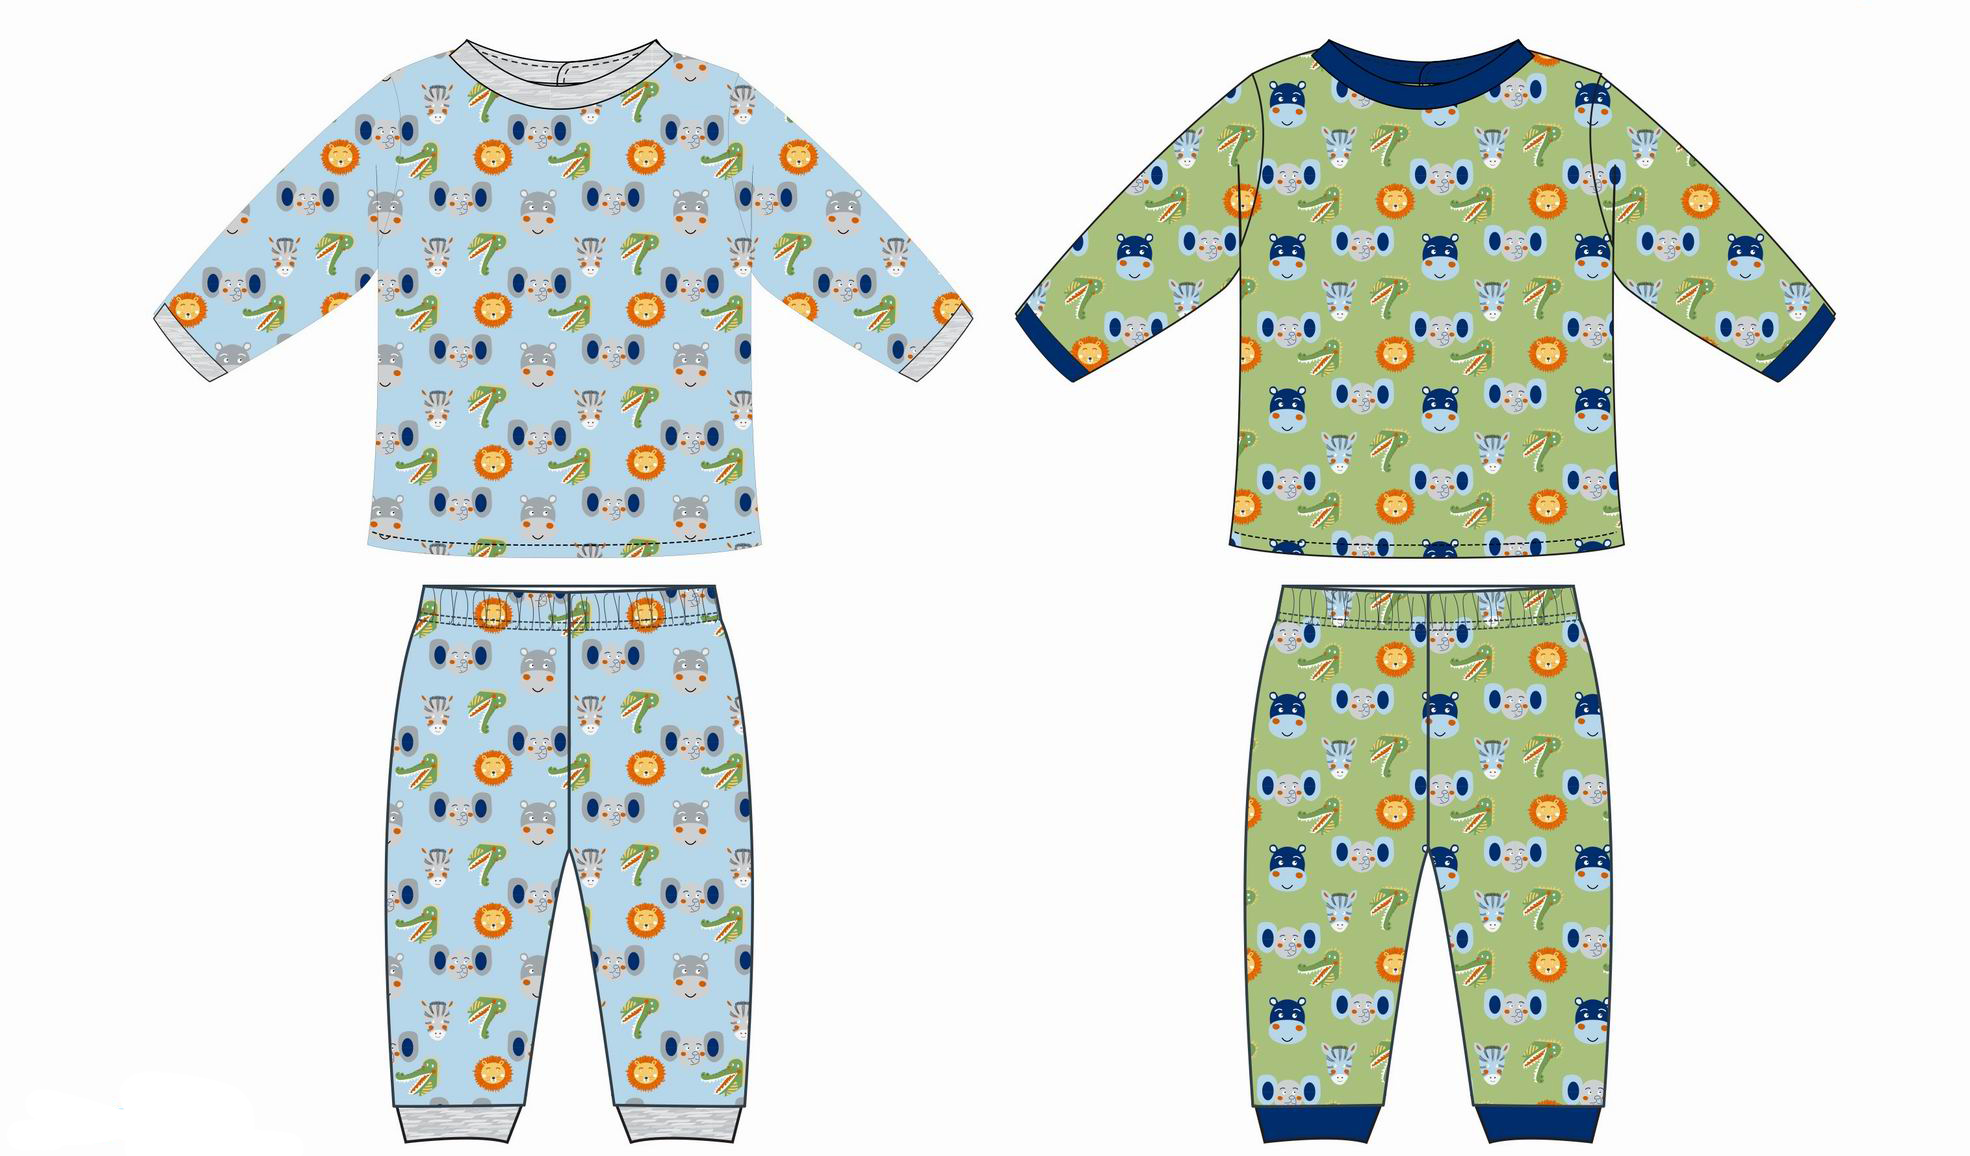 Boy's 2 PC. Rib Pajama Sets w/ Long-Sleeve SHIRT & Pull-On Pants - Safari Animal Print - Sizes 12M-2